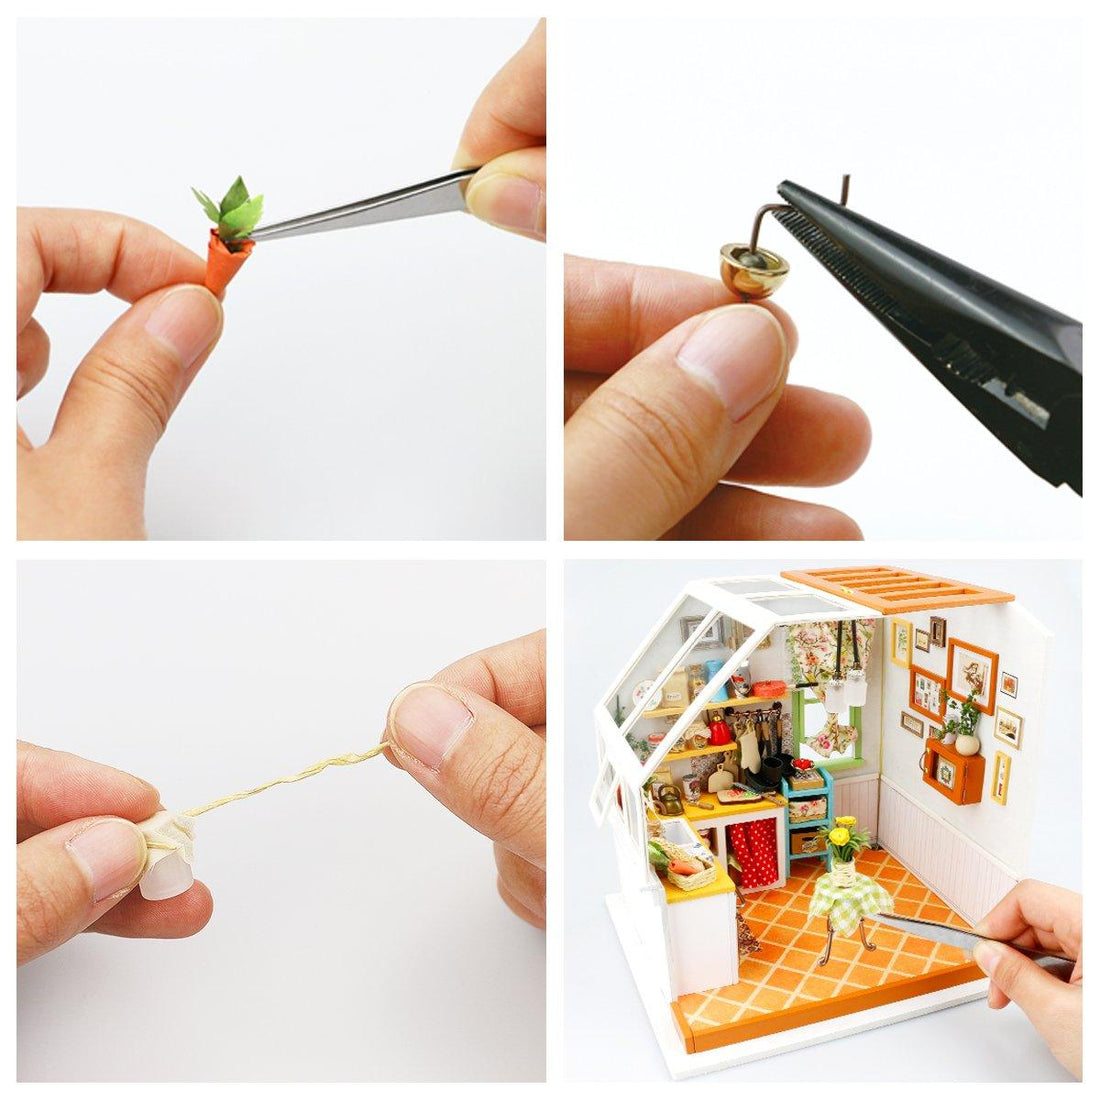 Jason's Kitchen Miniature Dollhouse - Kitty Hawk Kites Online Store